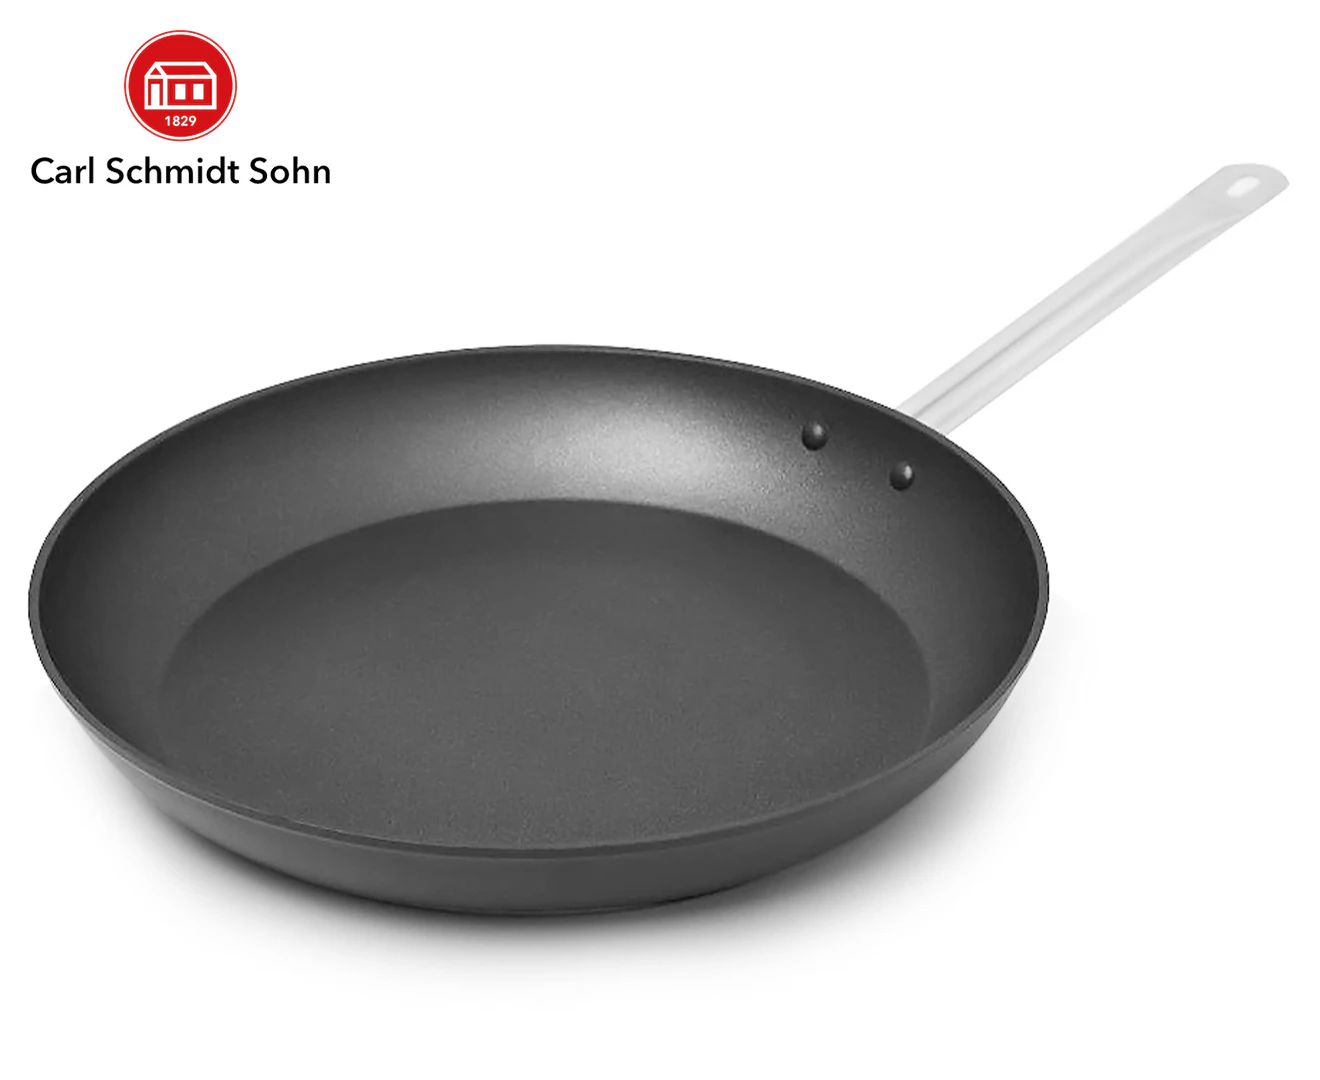 Carl Schmidt Sohn Pan 28cm Fry Pro Solaris Non-Stick